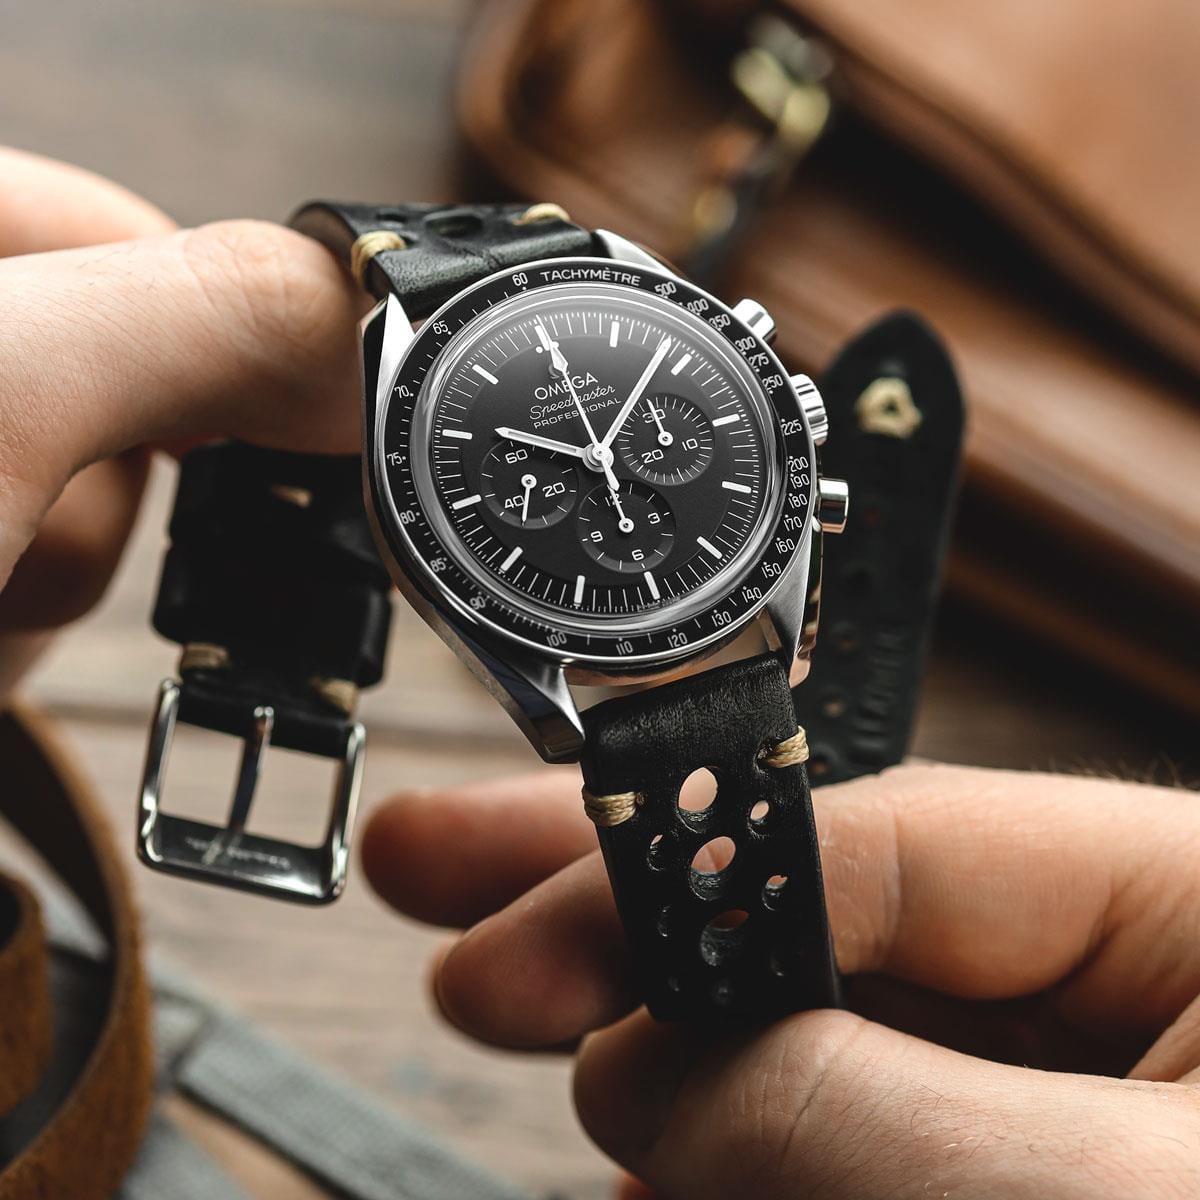 Black Leather Watch Strap 